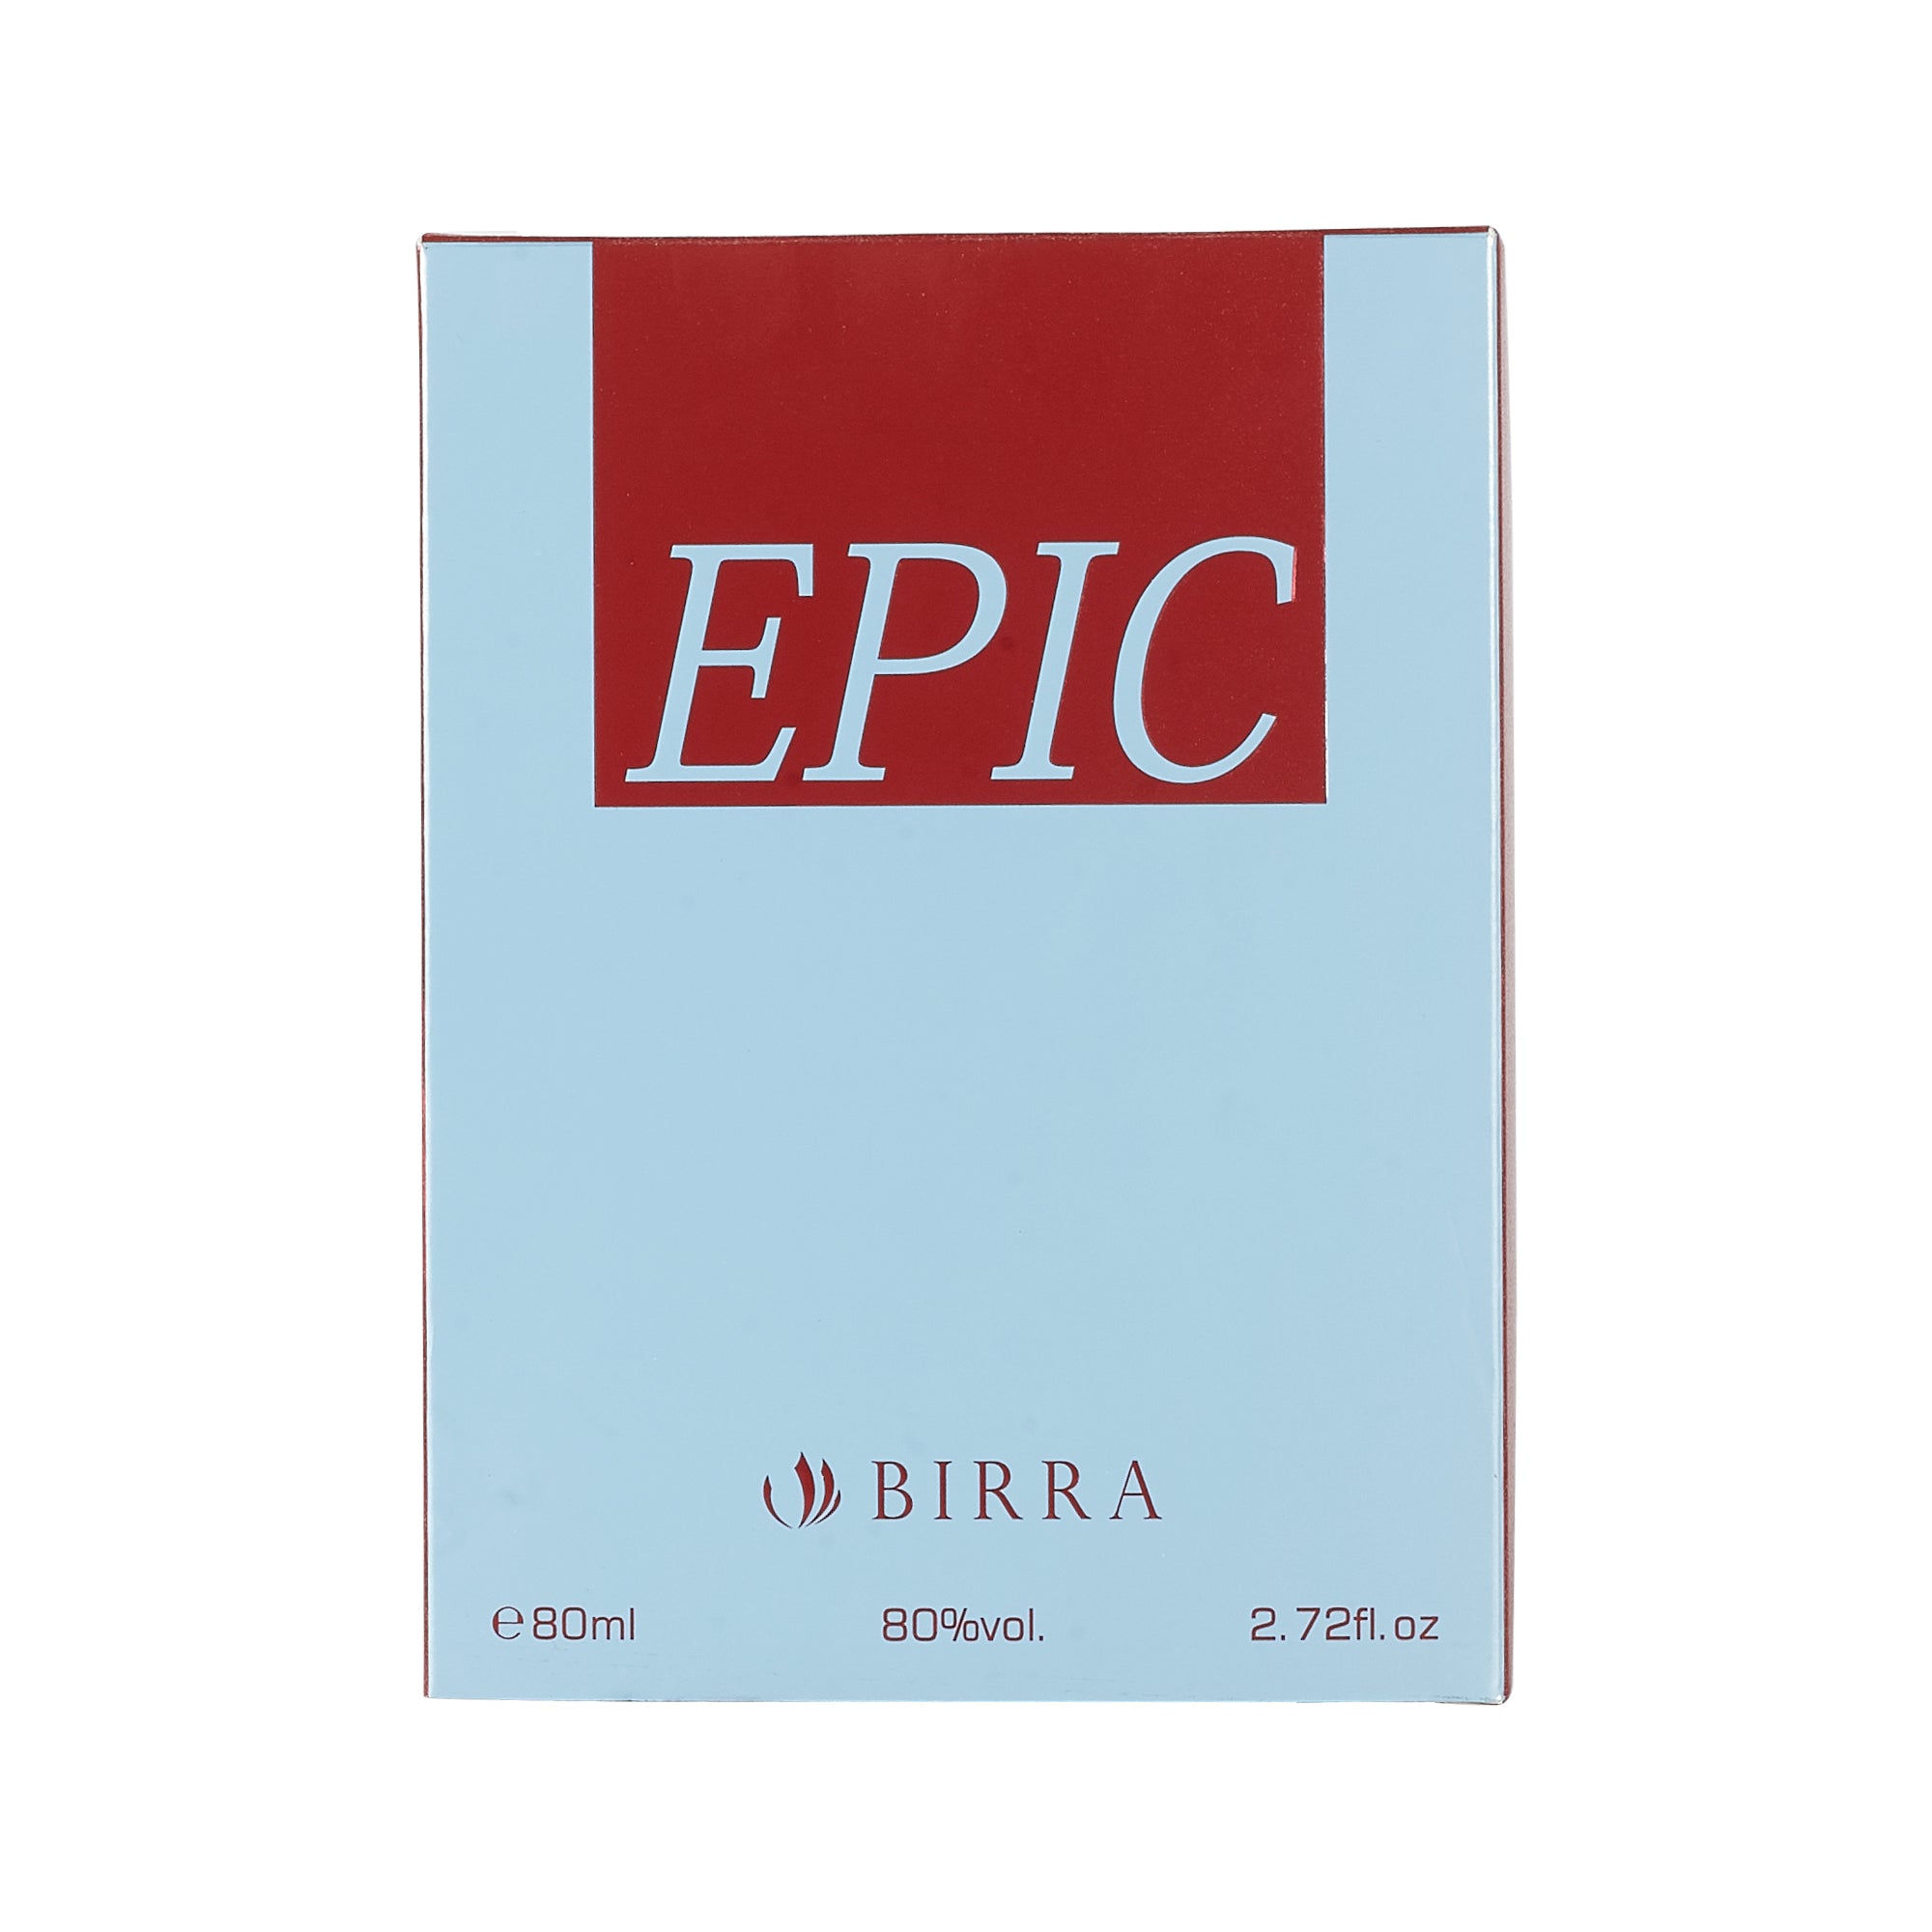 Epic EDP 80ml- Premium Perfume